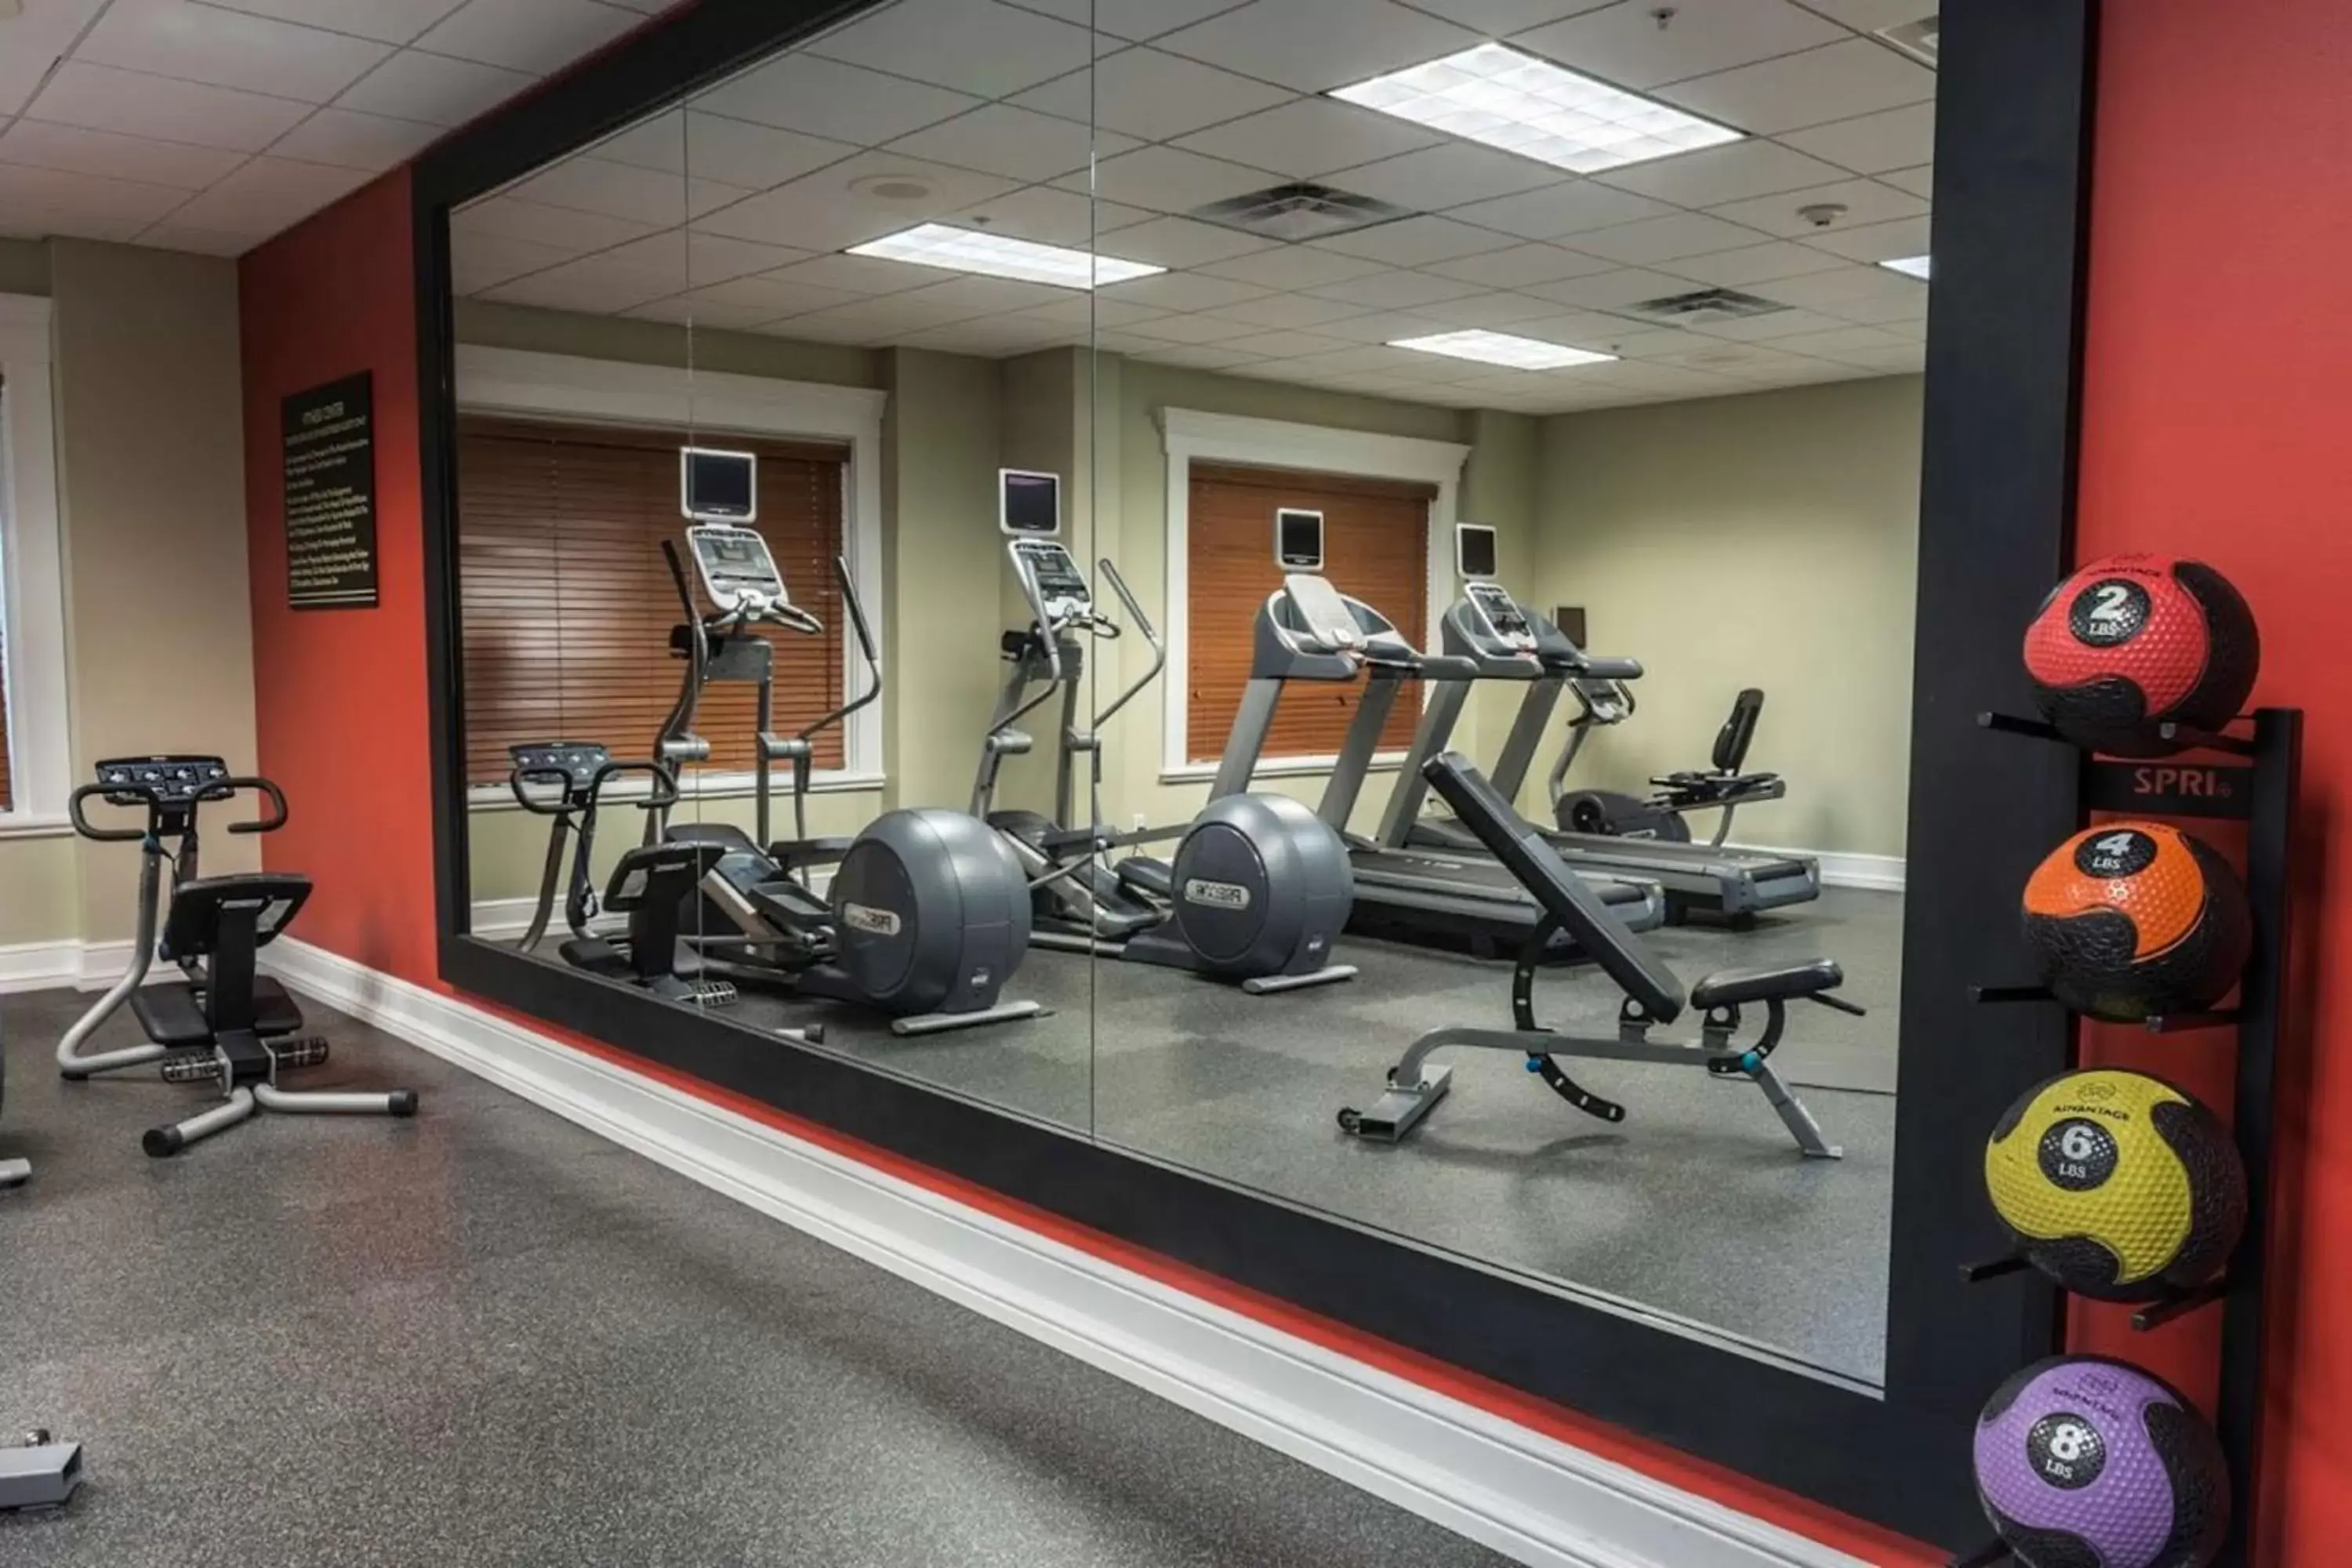 Fitness centre/facilities, Fitness Center/Facilities in Hilton Garden Inn Bangor